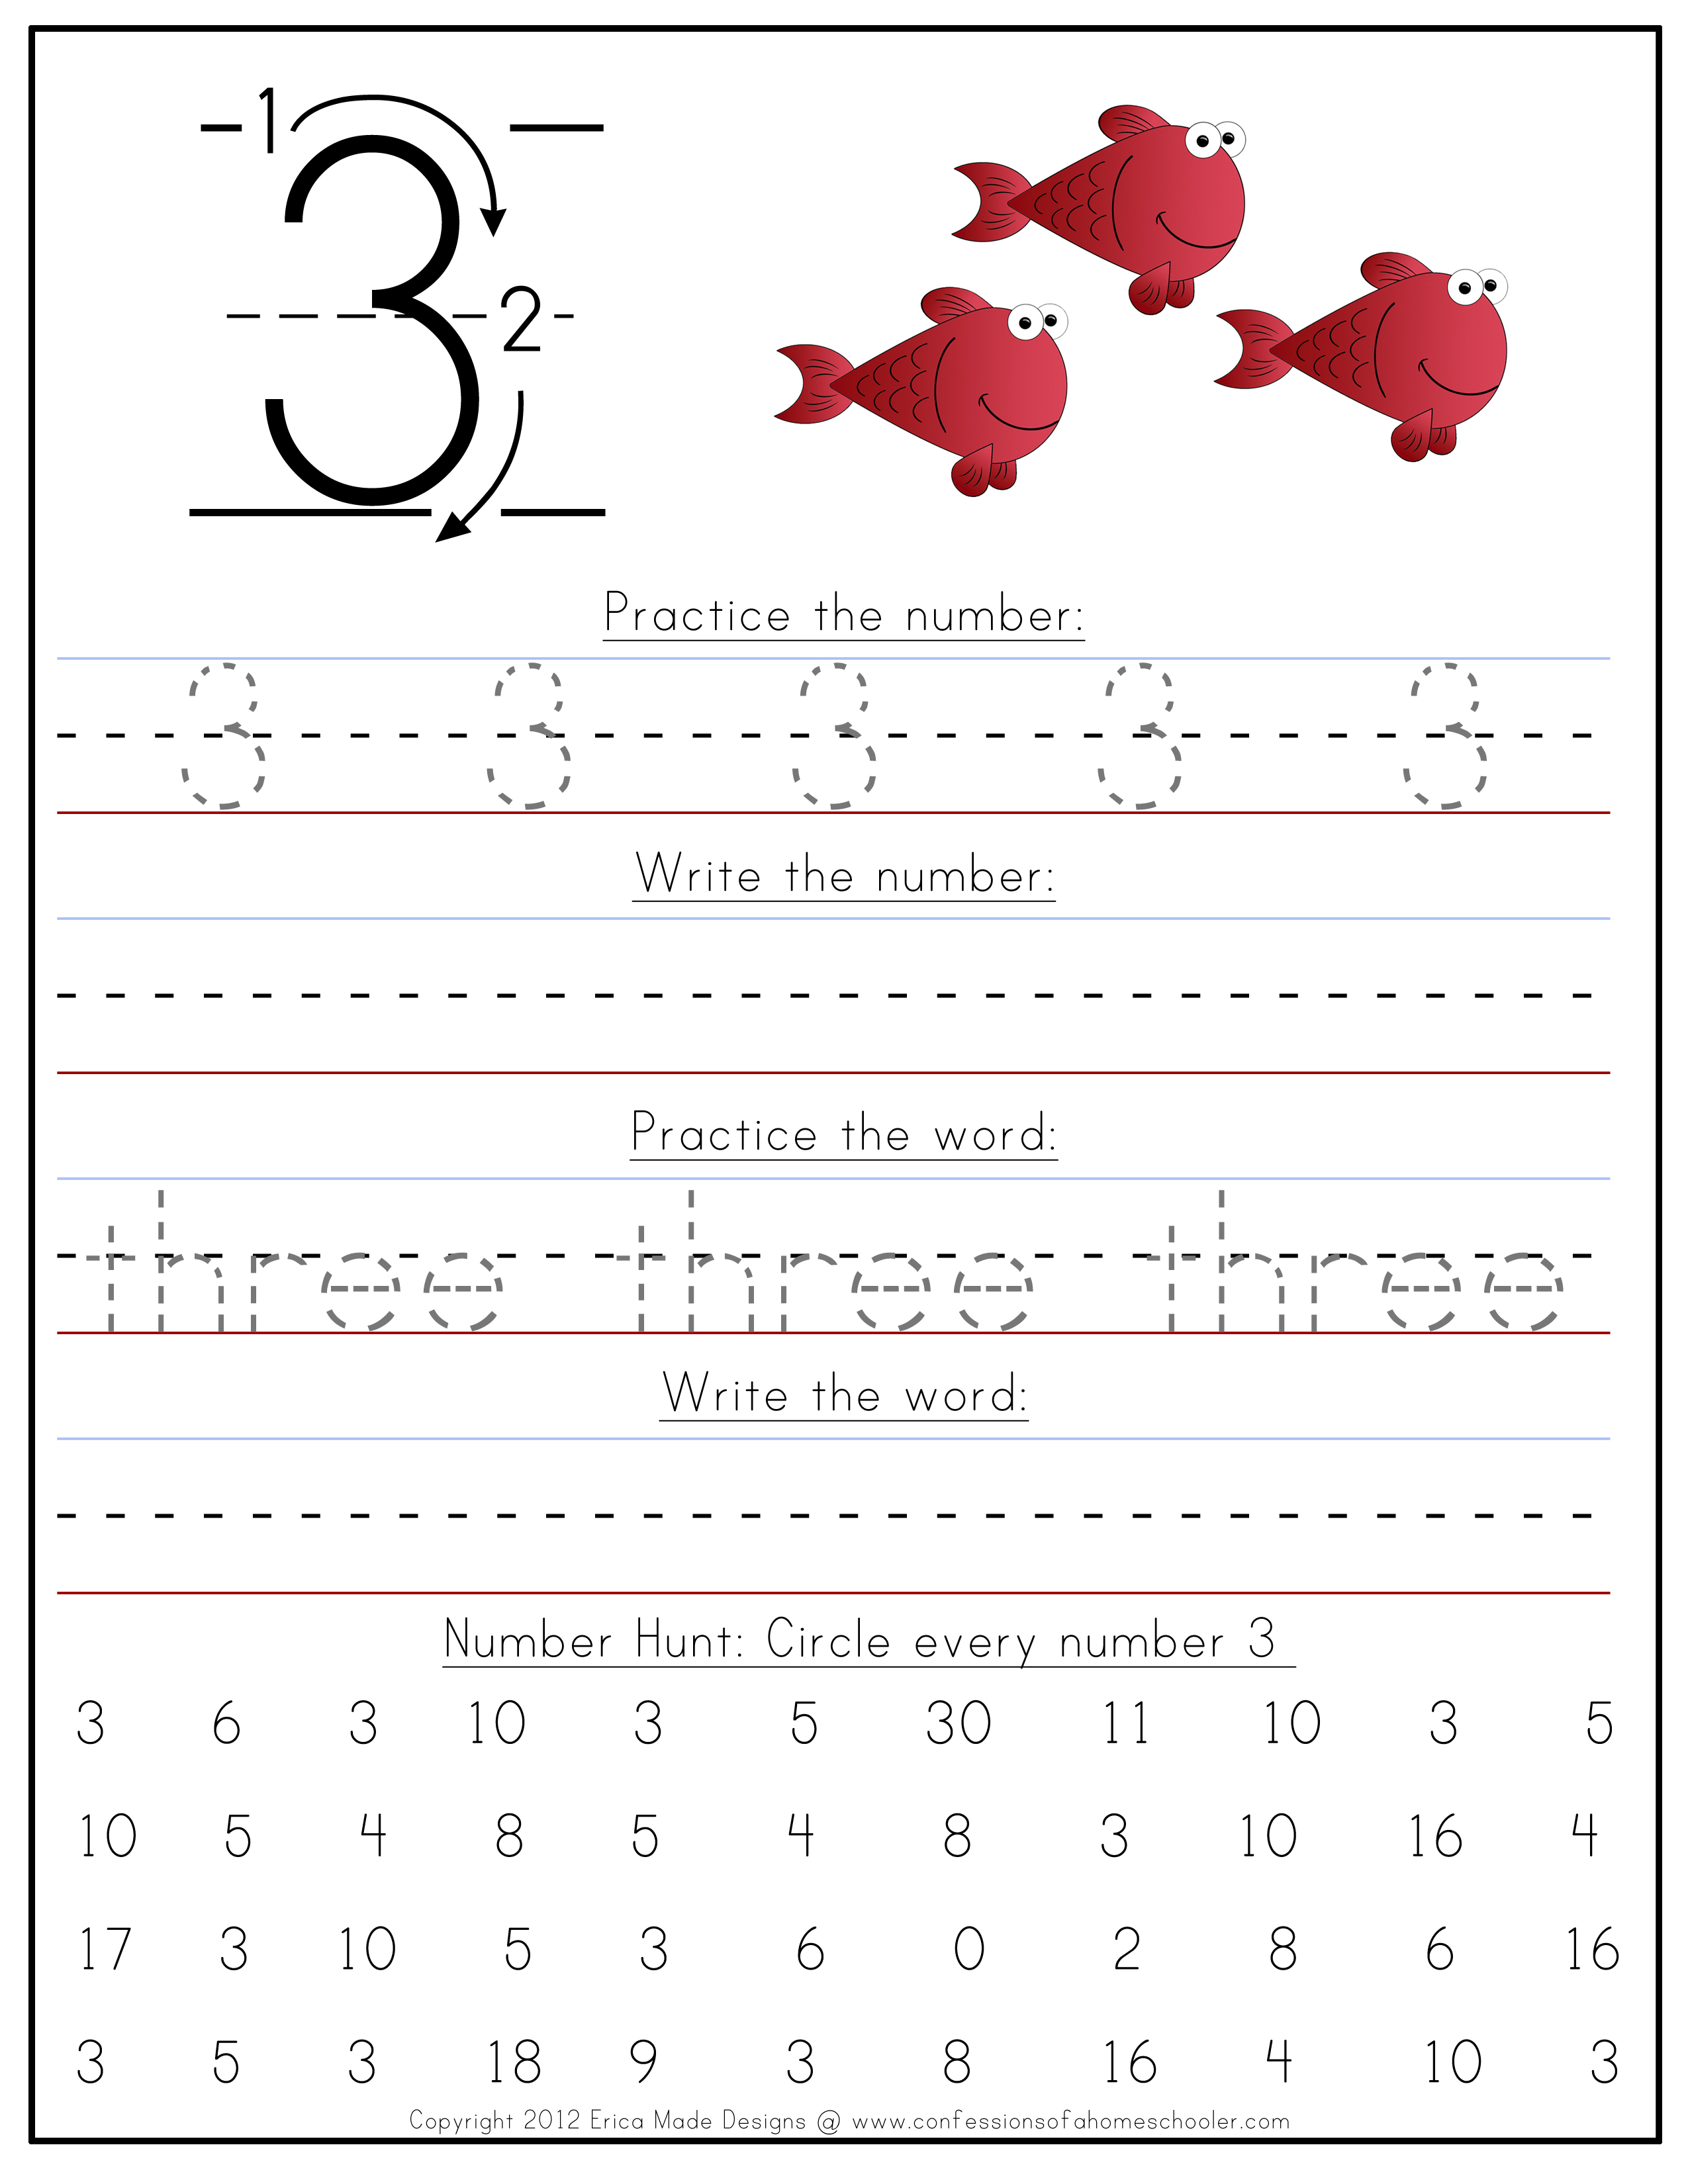 writing-numbers-to-words-worksheet